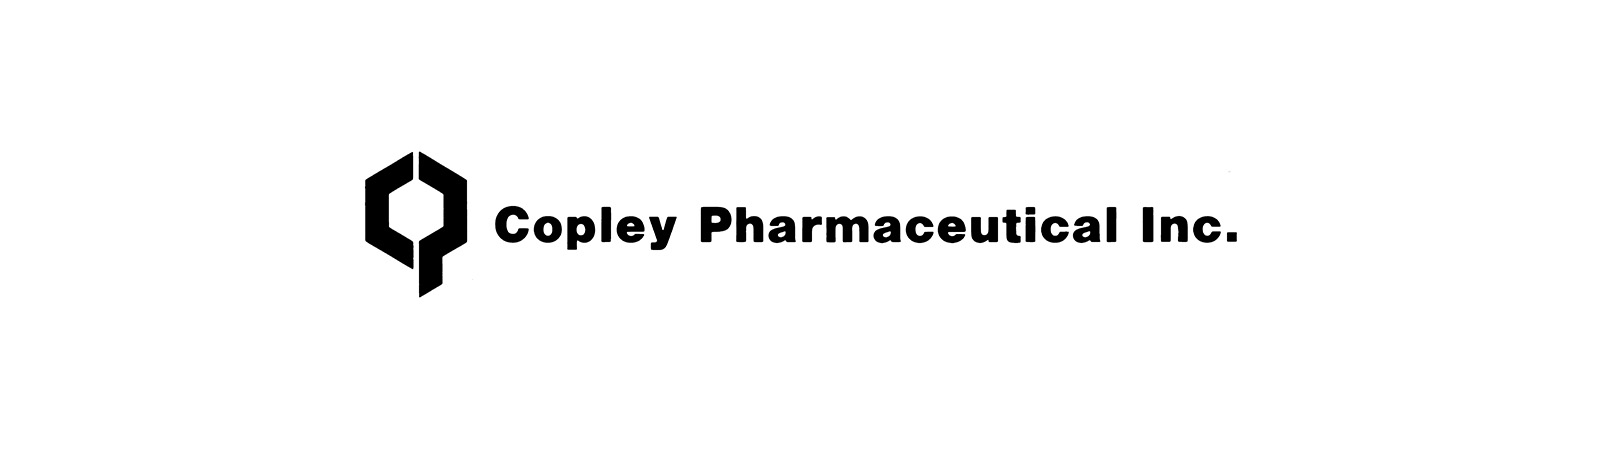 Copley Pharmaceutical, Inc.